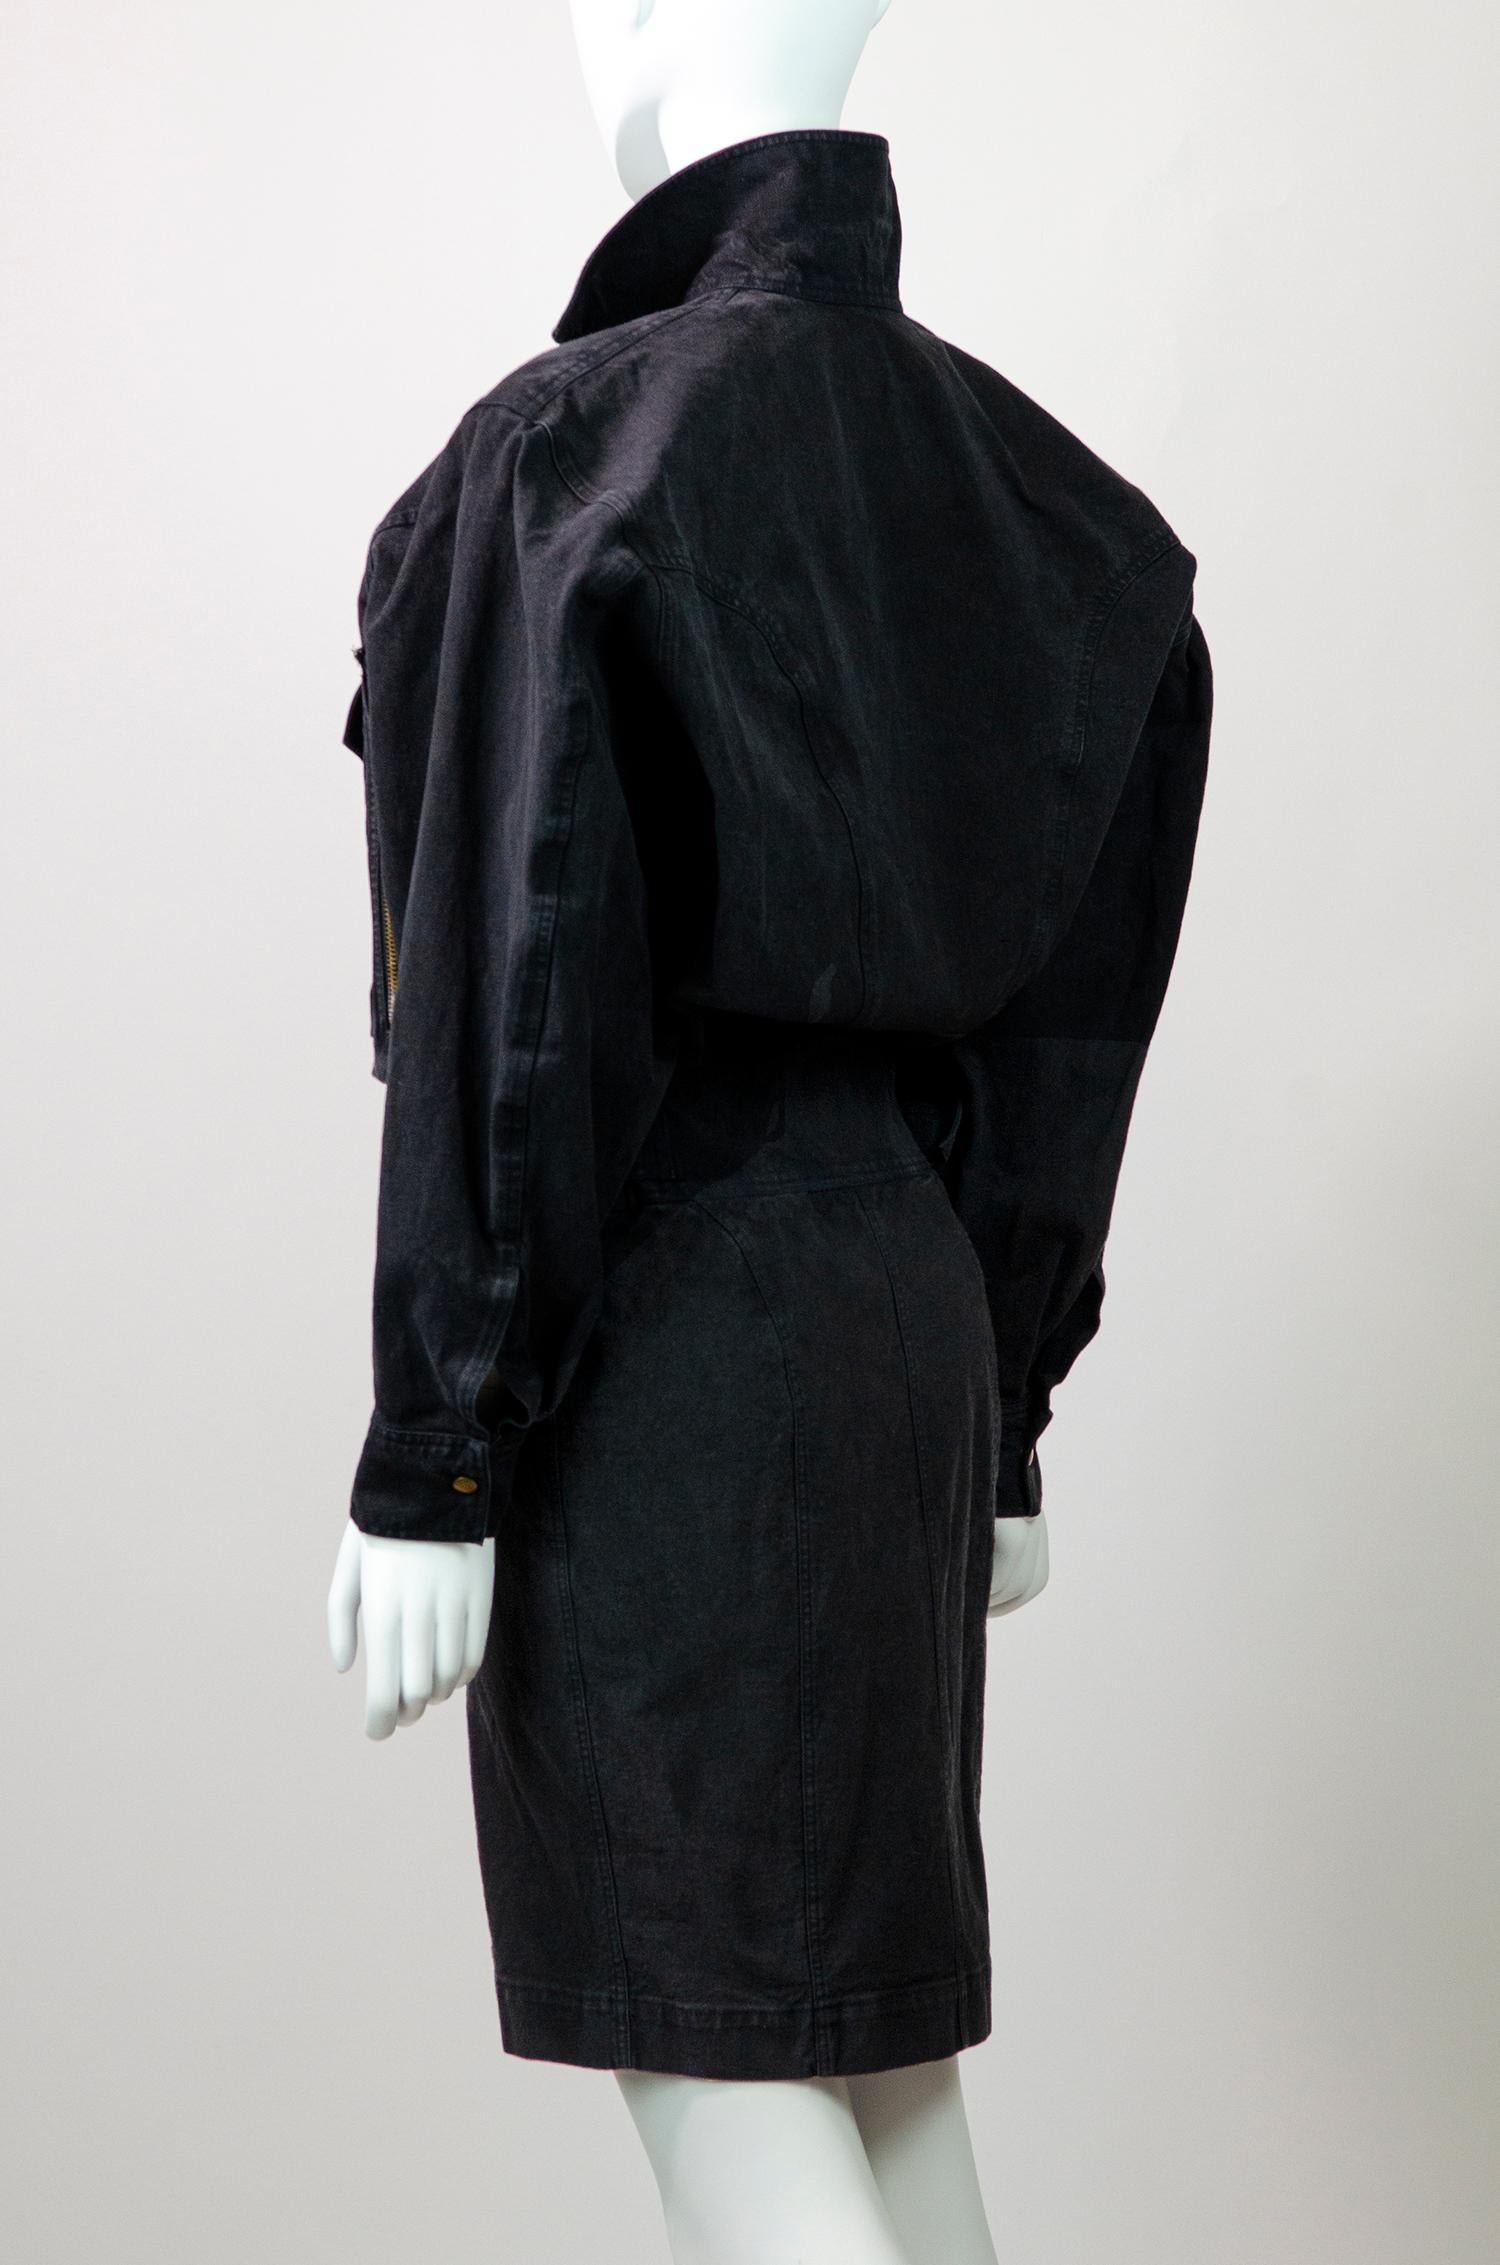 ALAÏA S/S 1986 Vintage Runway Denim Zipper Dress With Pockets 4